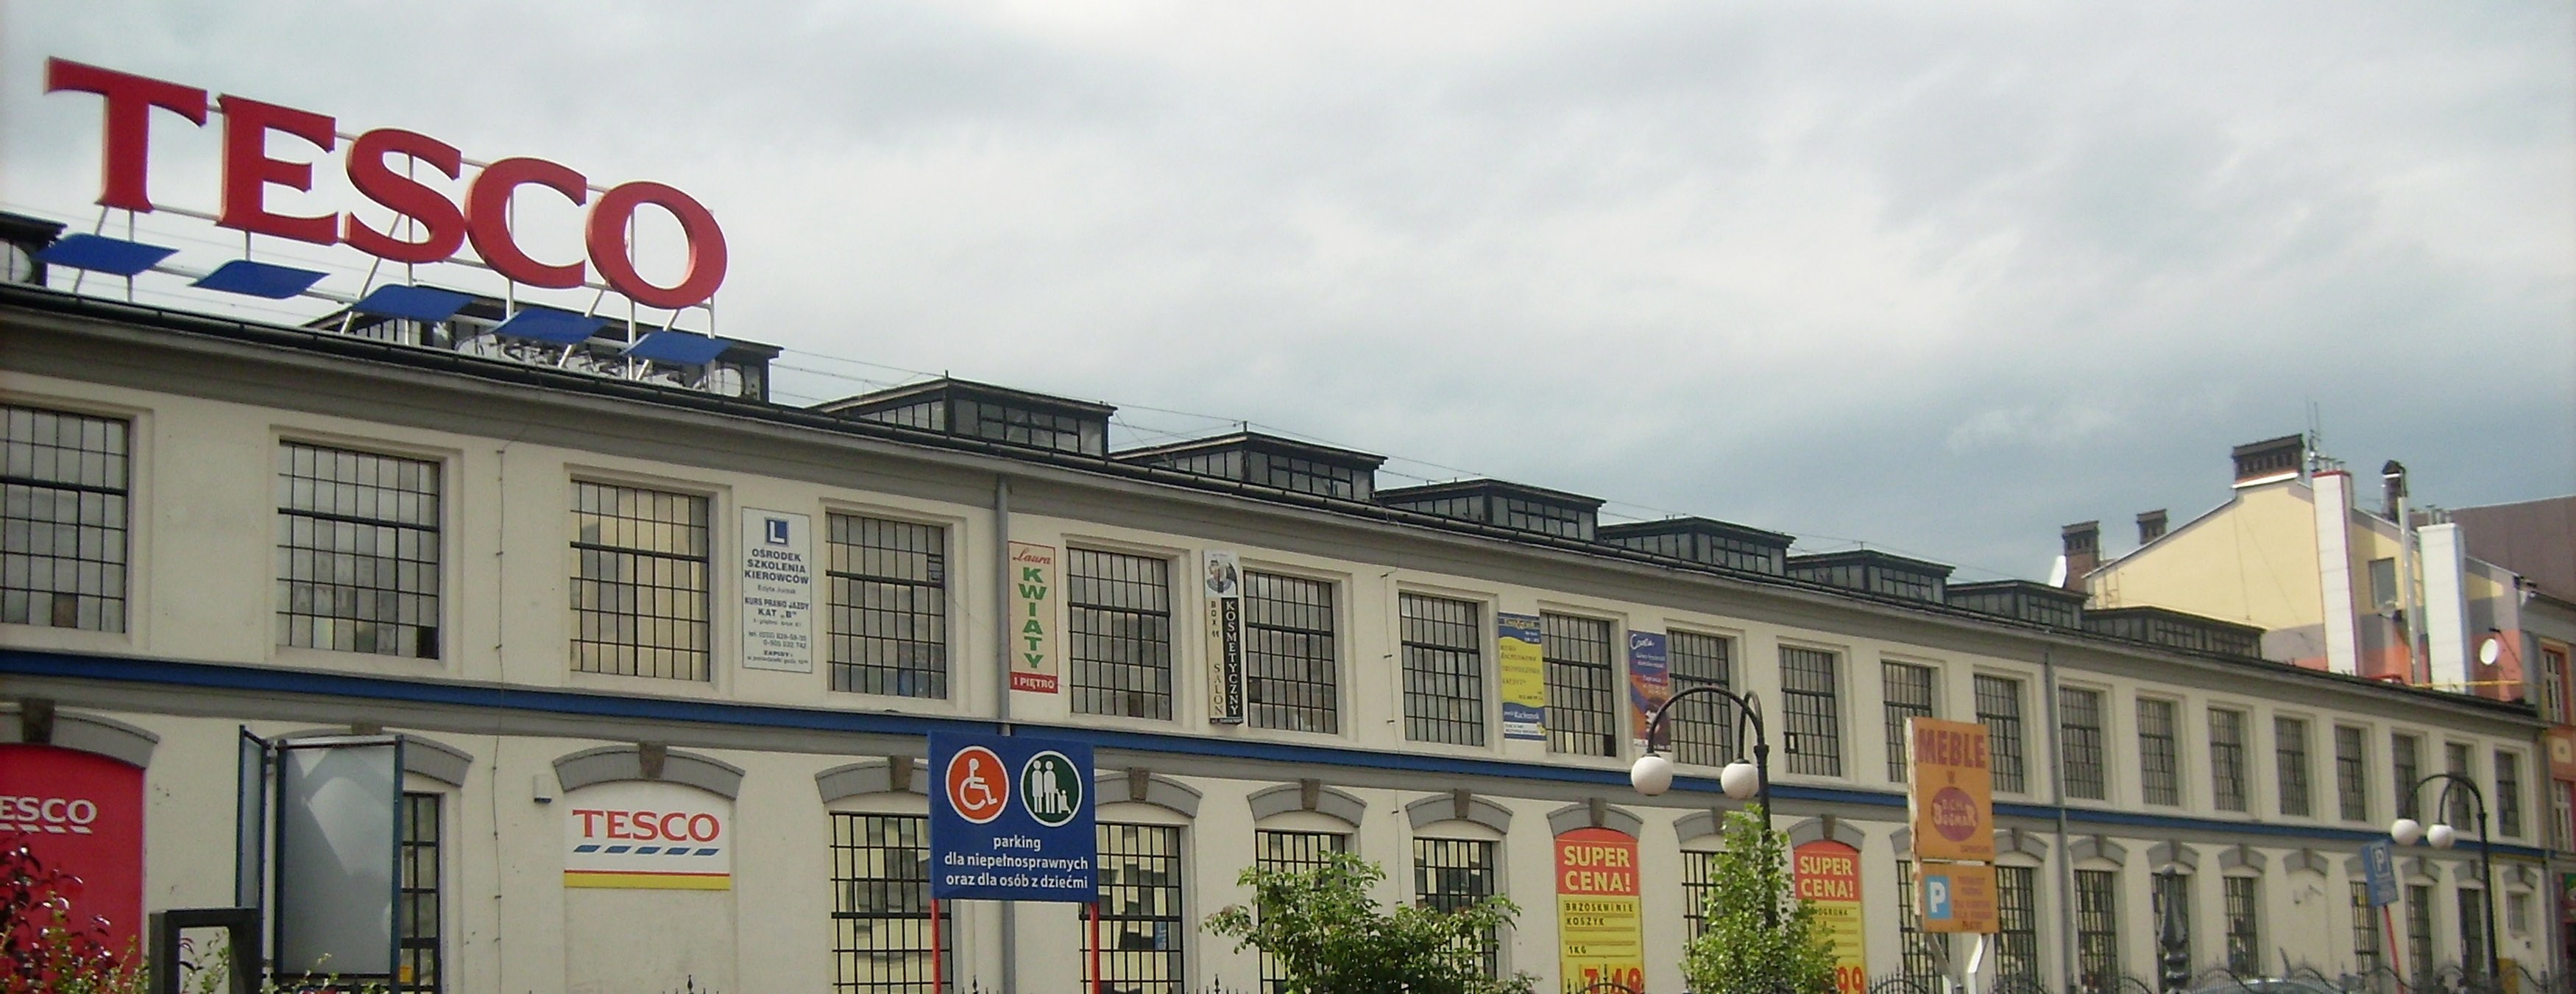 Tesco store in Poland. Photo: Wikimedia Commons